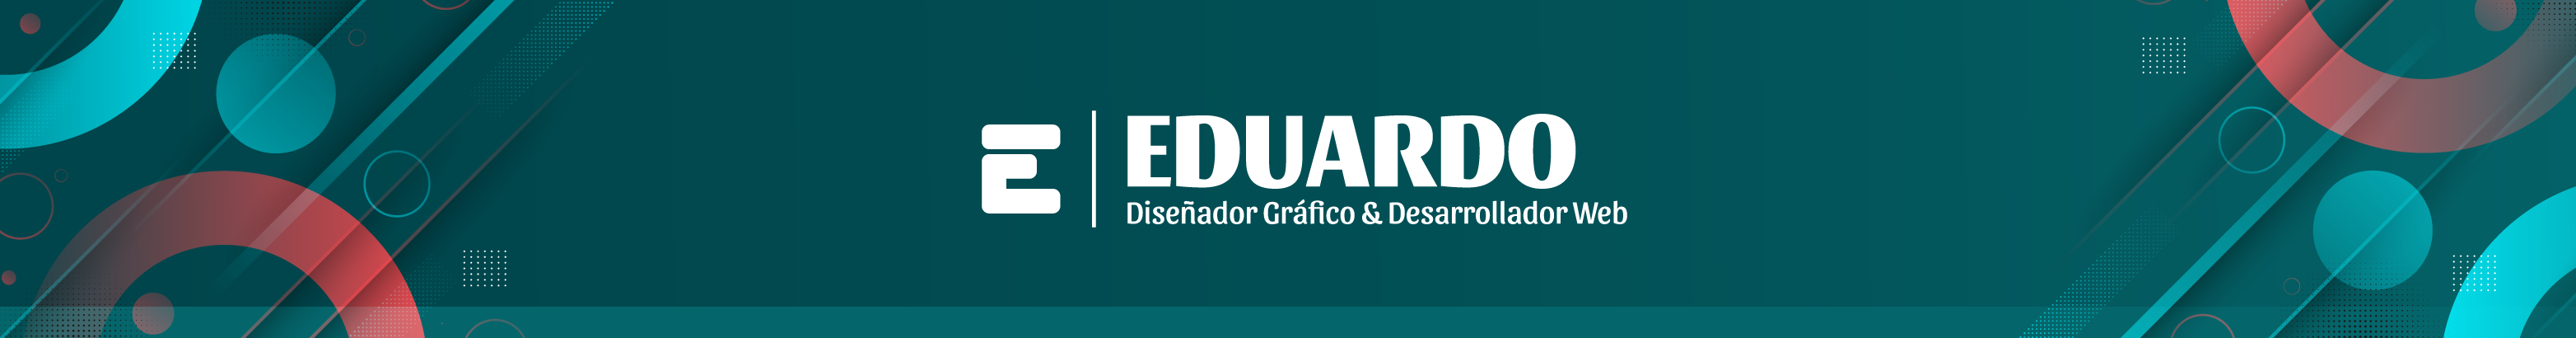 F Eduardo Huaranga Quispes profilbanner